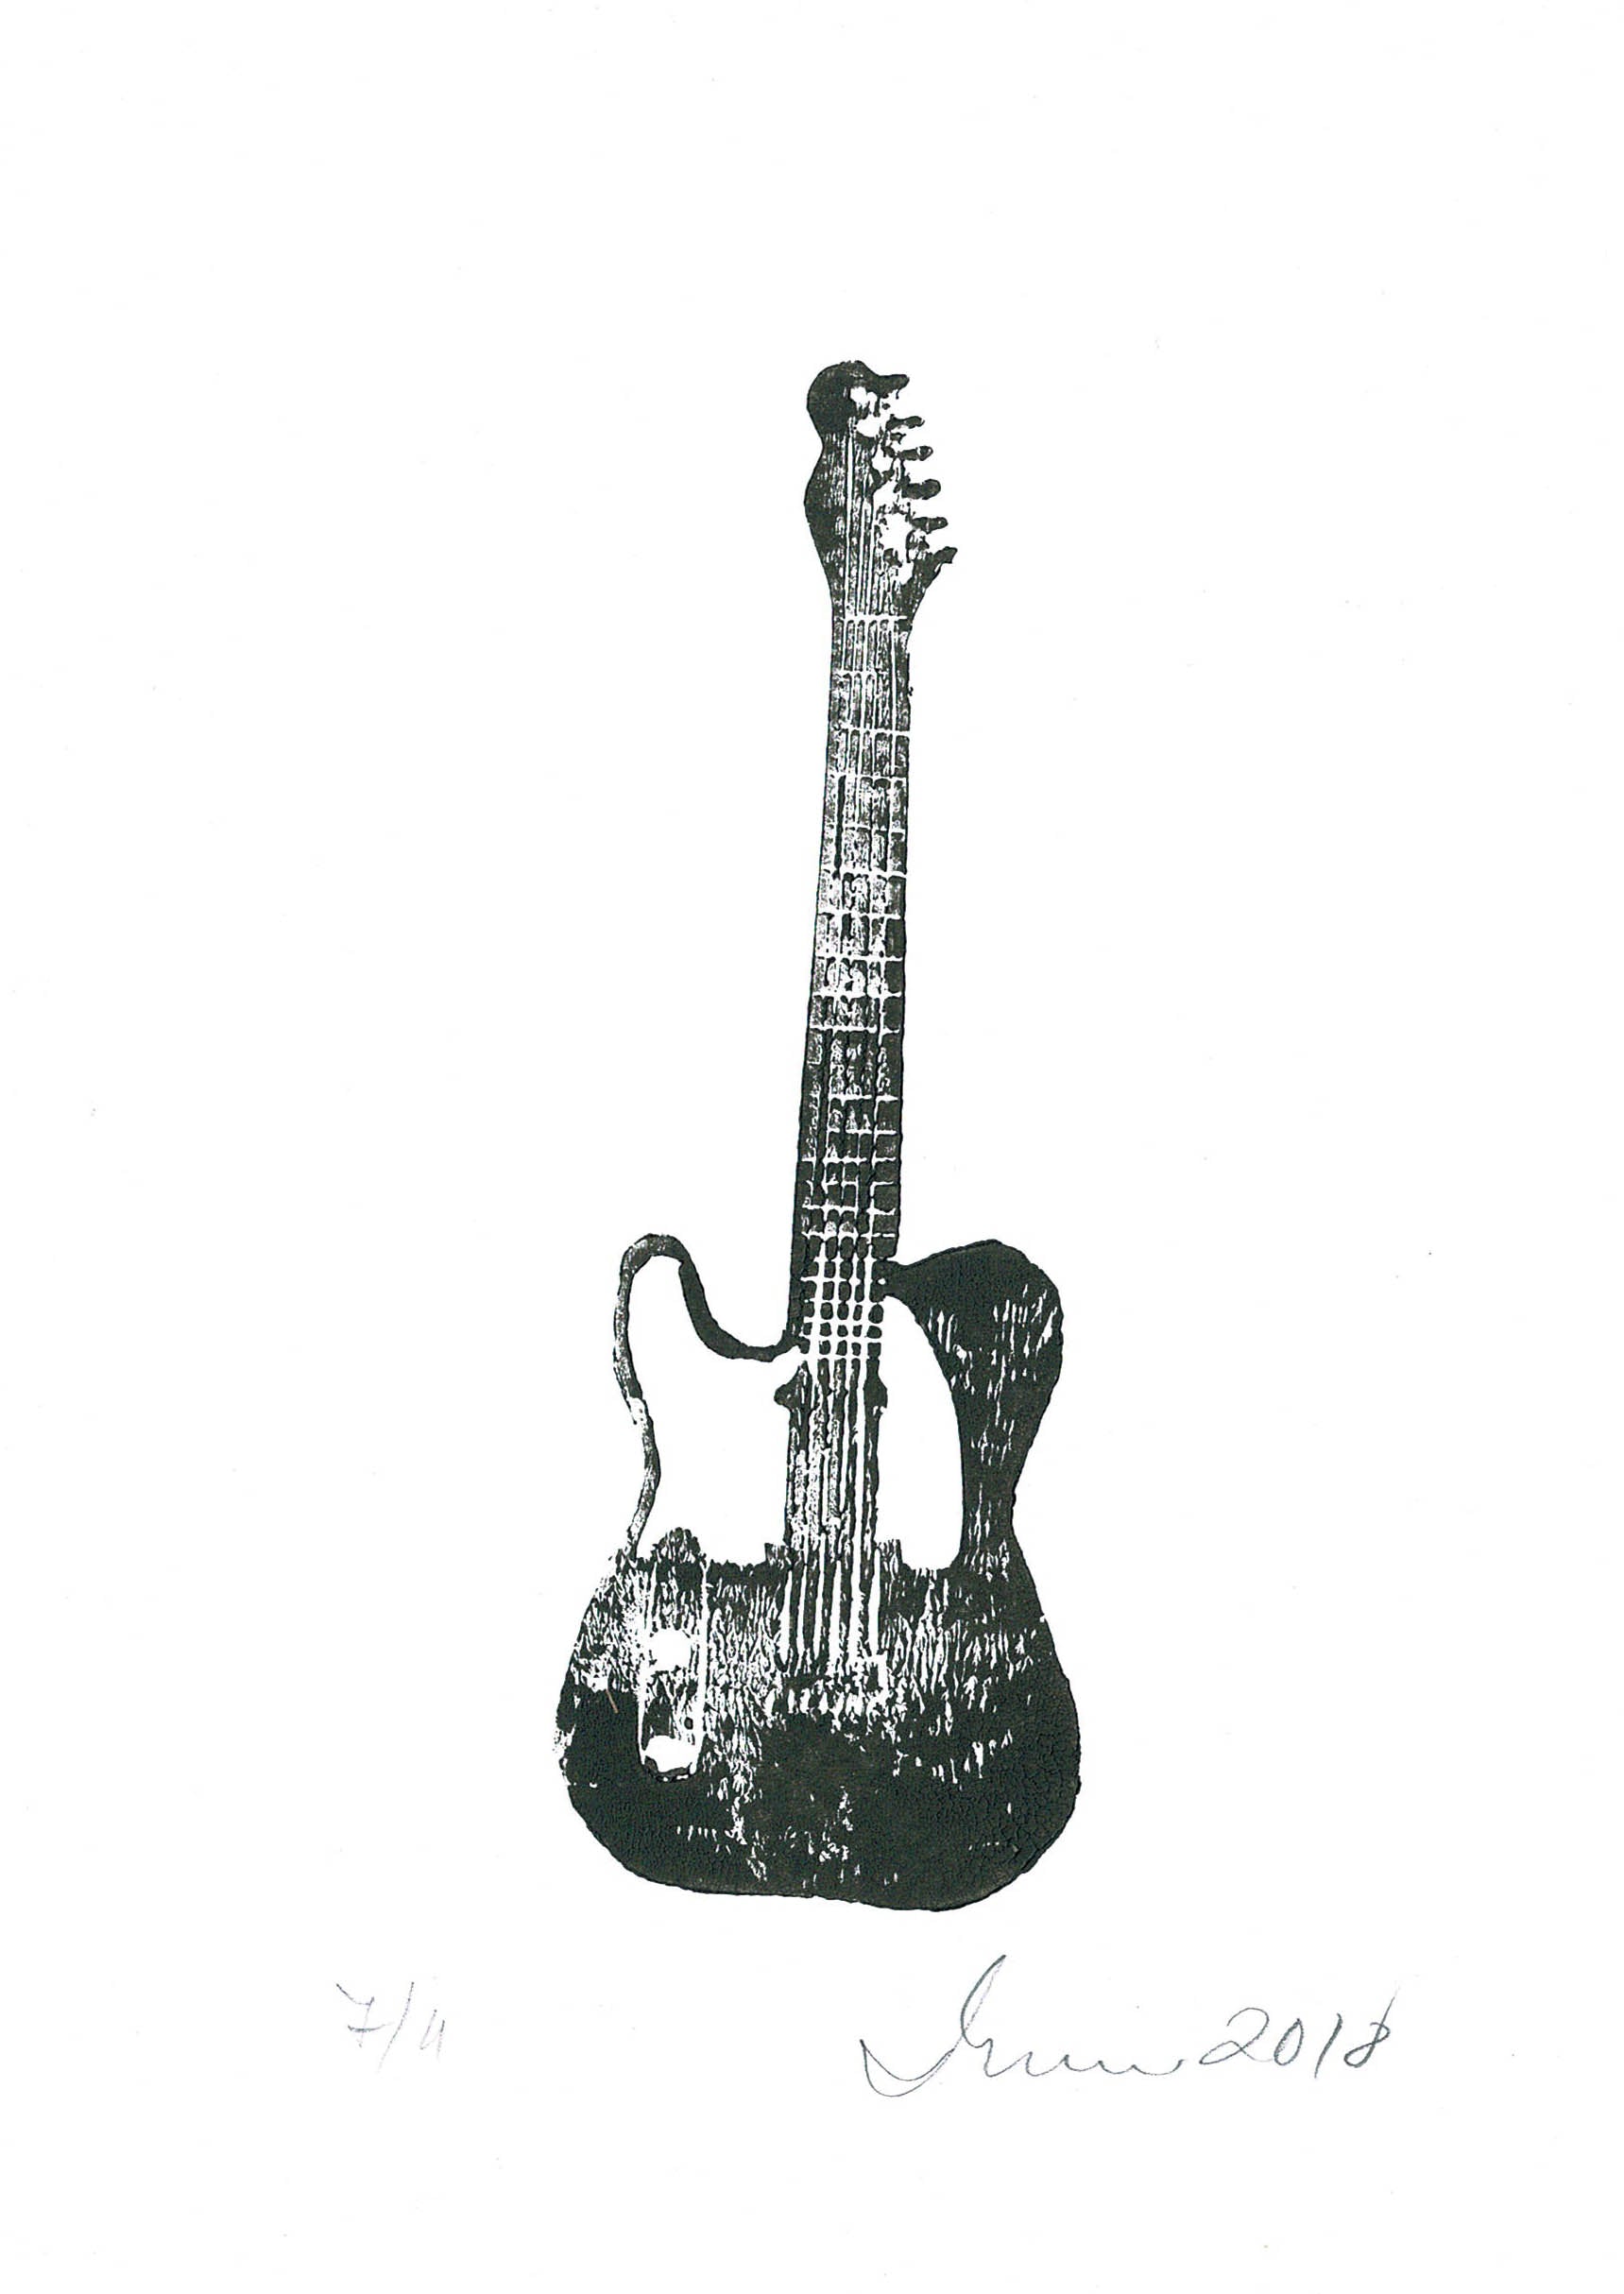 A5 lino cut impression of classic electric guitar in black ink